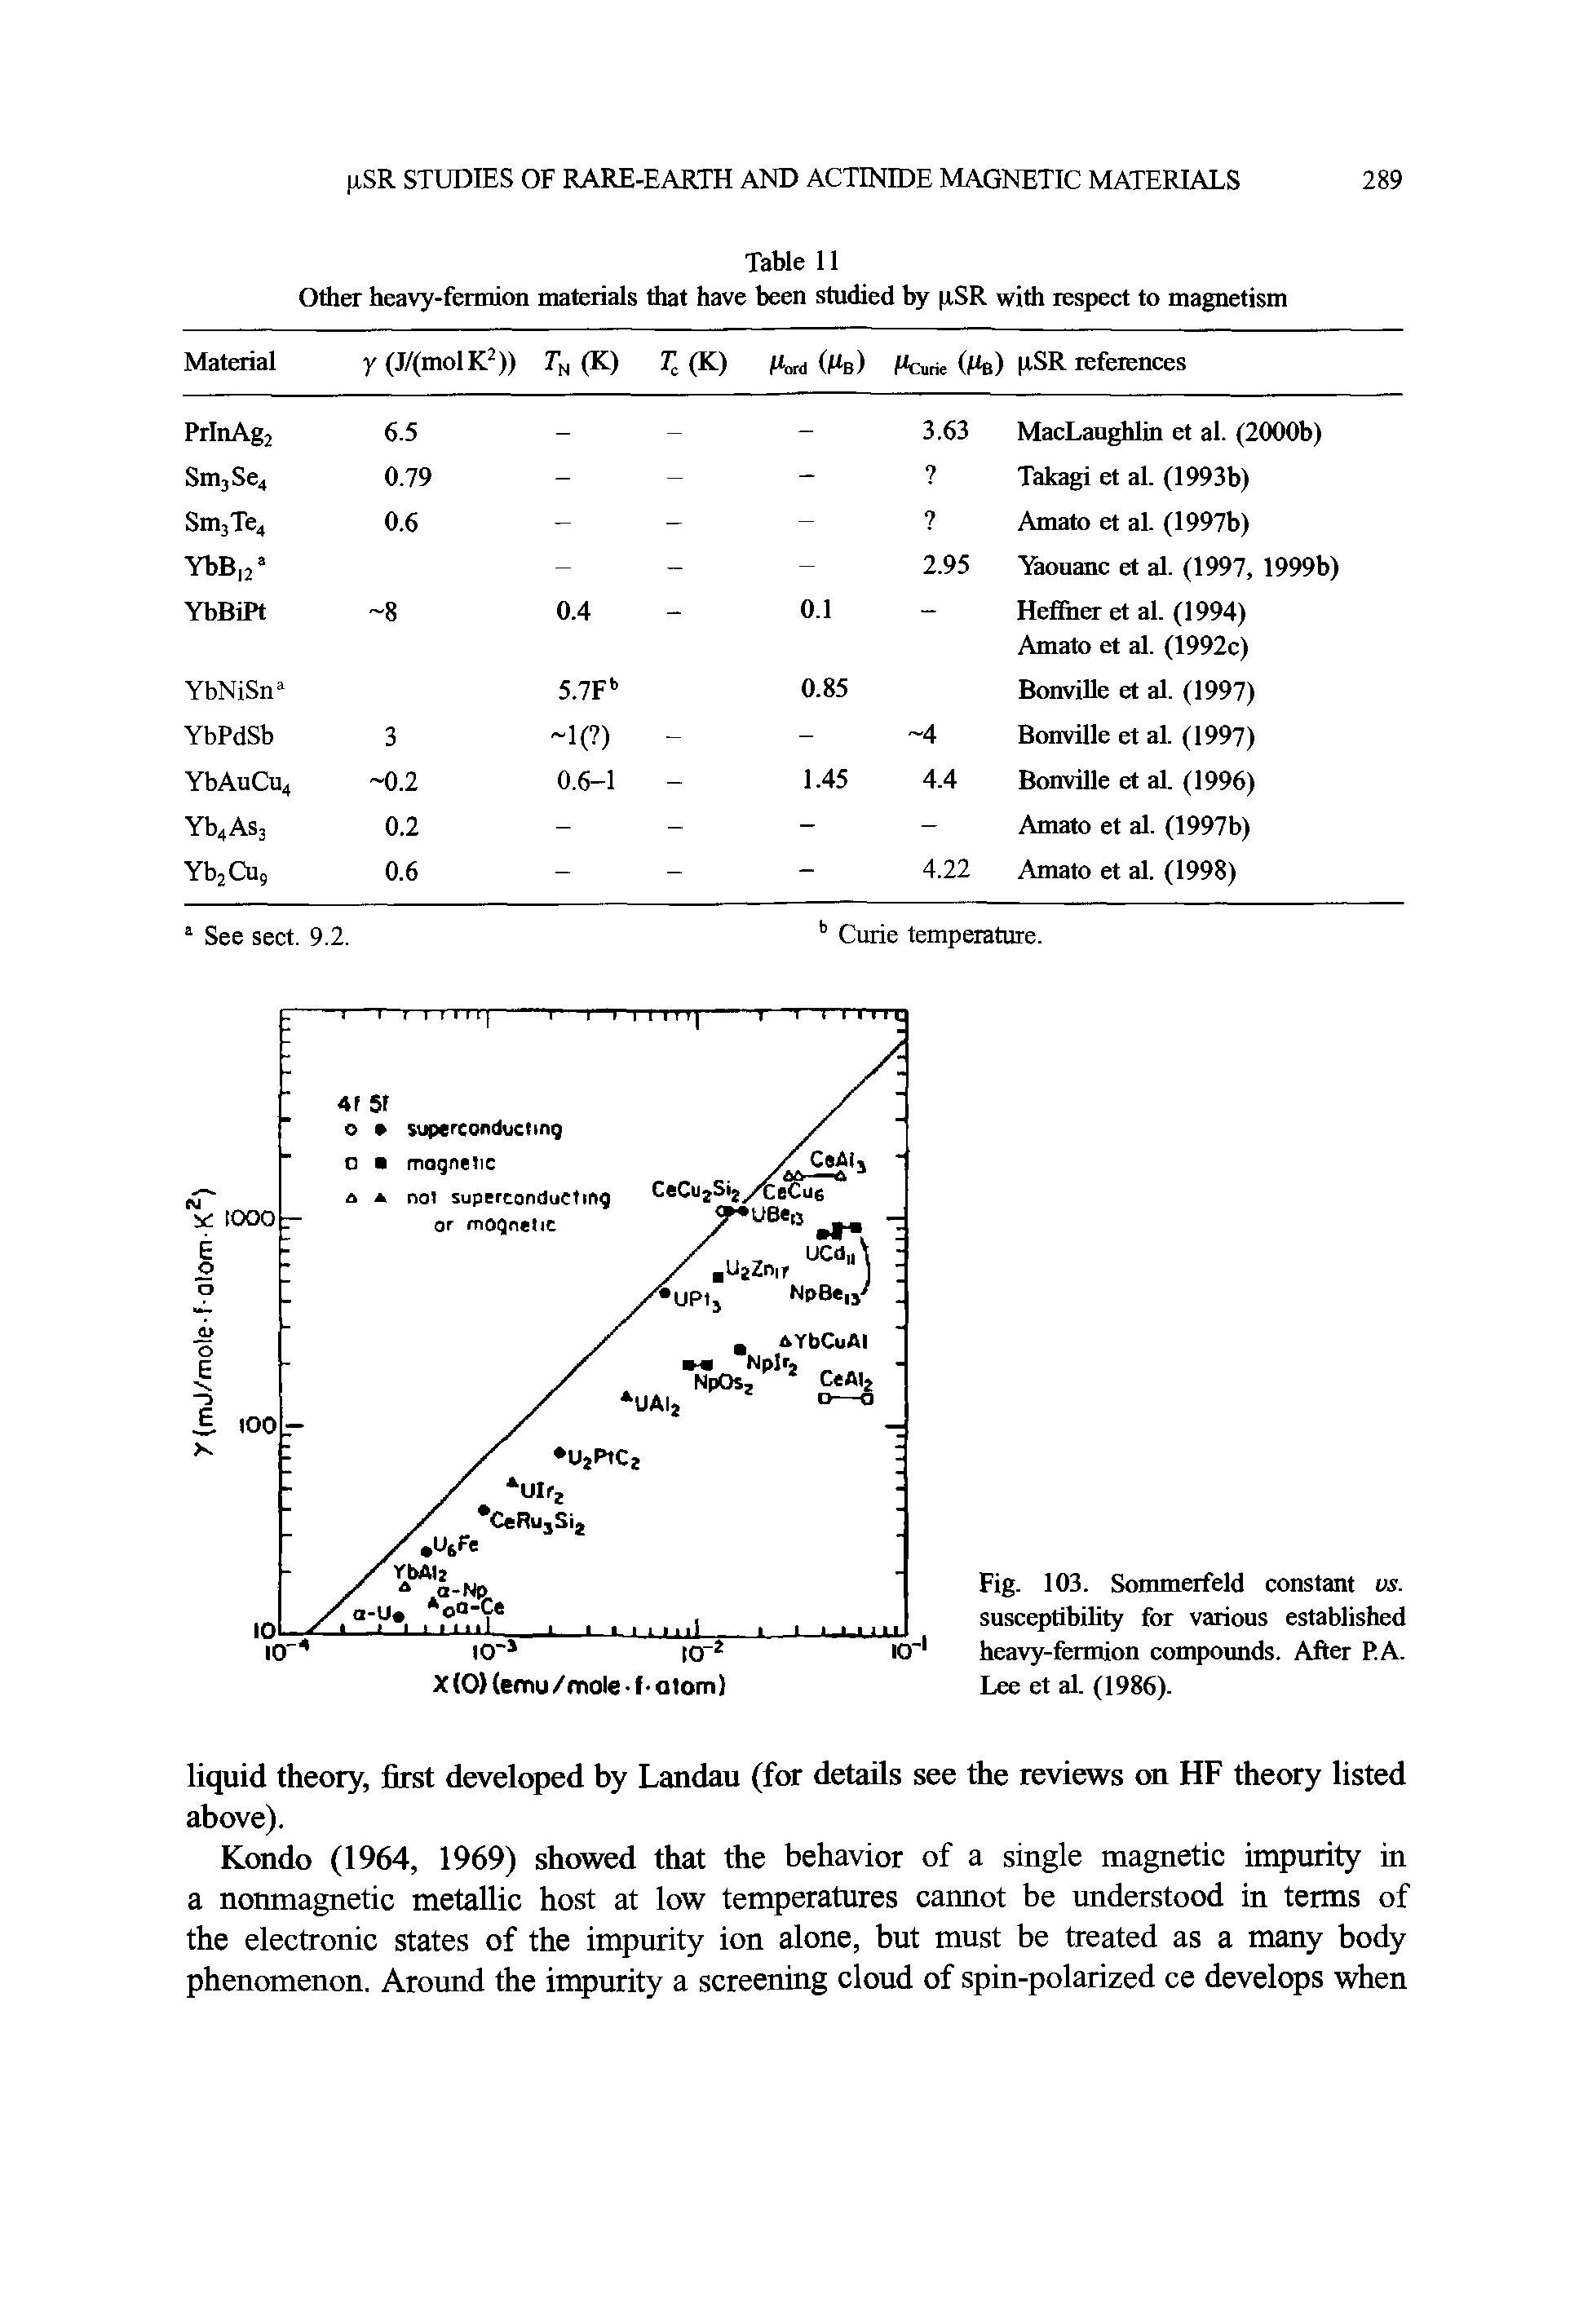 Fig. 103. Sommerfeld constant vs. susceptibility for various established heavy-fermion compoimds. After P.A. Lee et al. (1986).